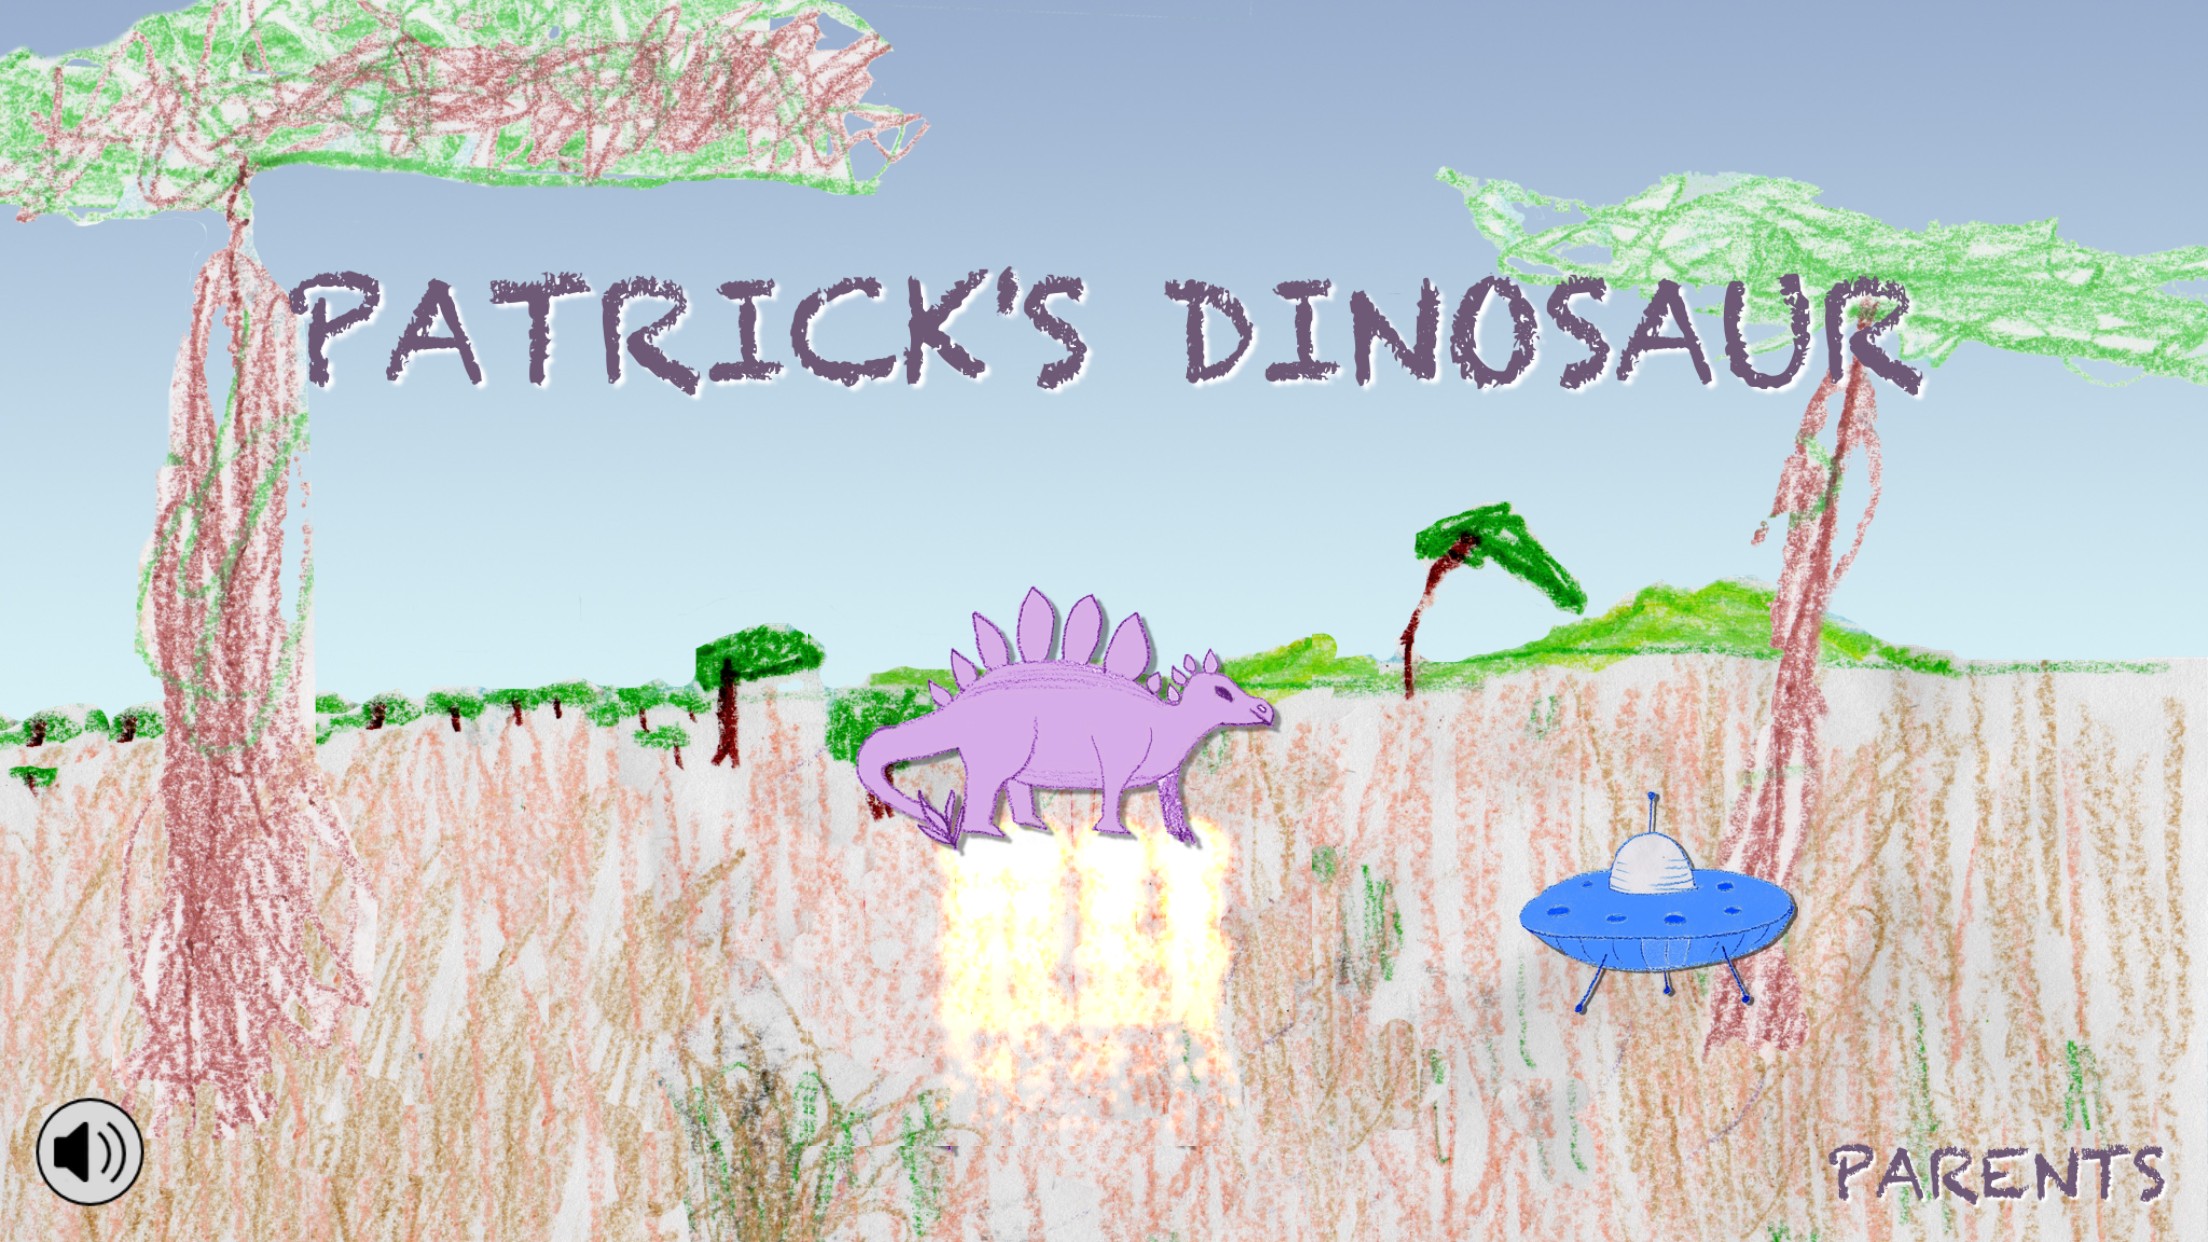 Patrick's Dinosaur